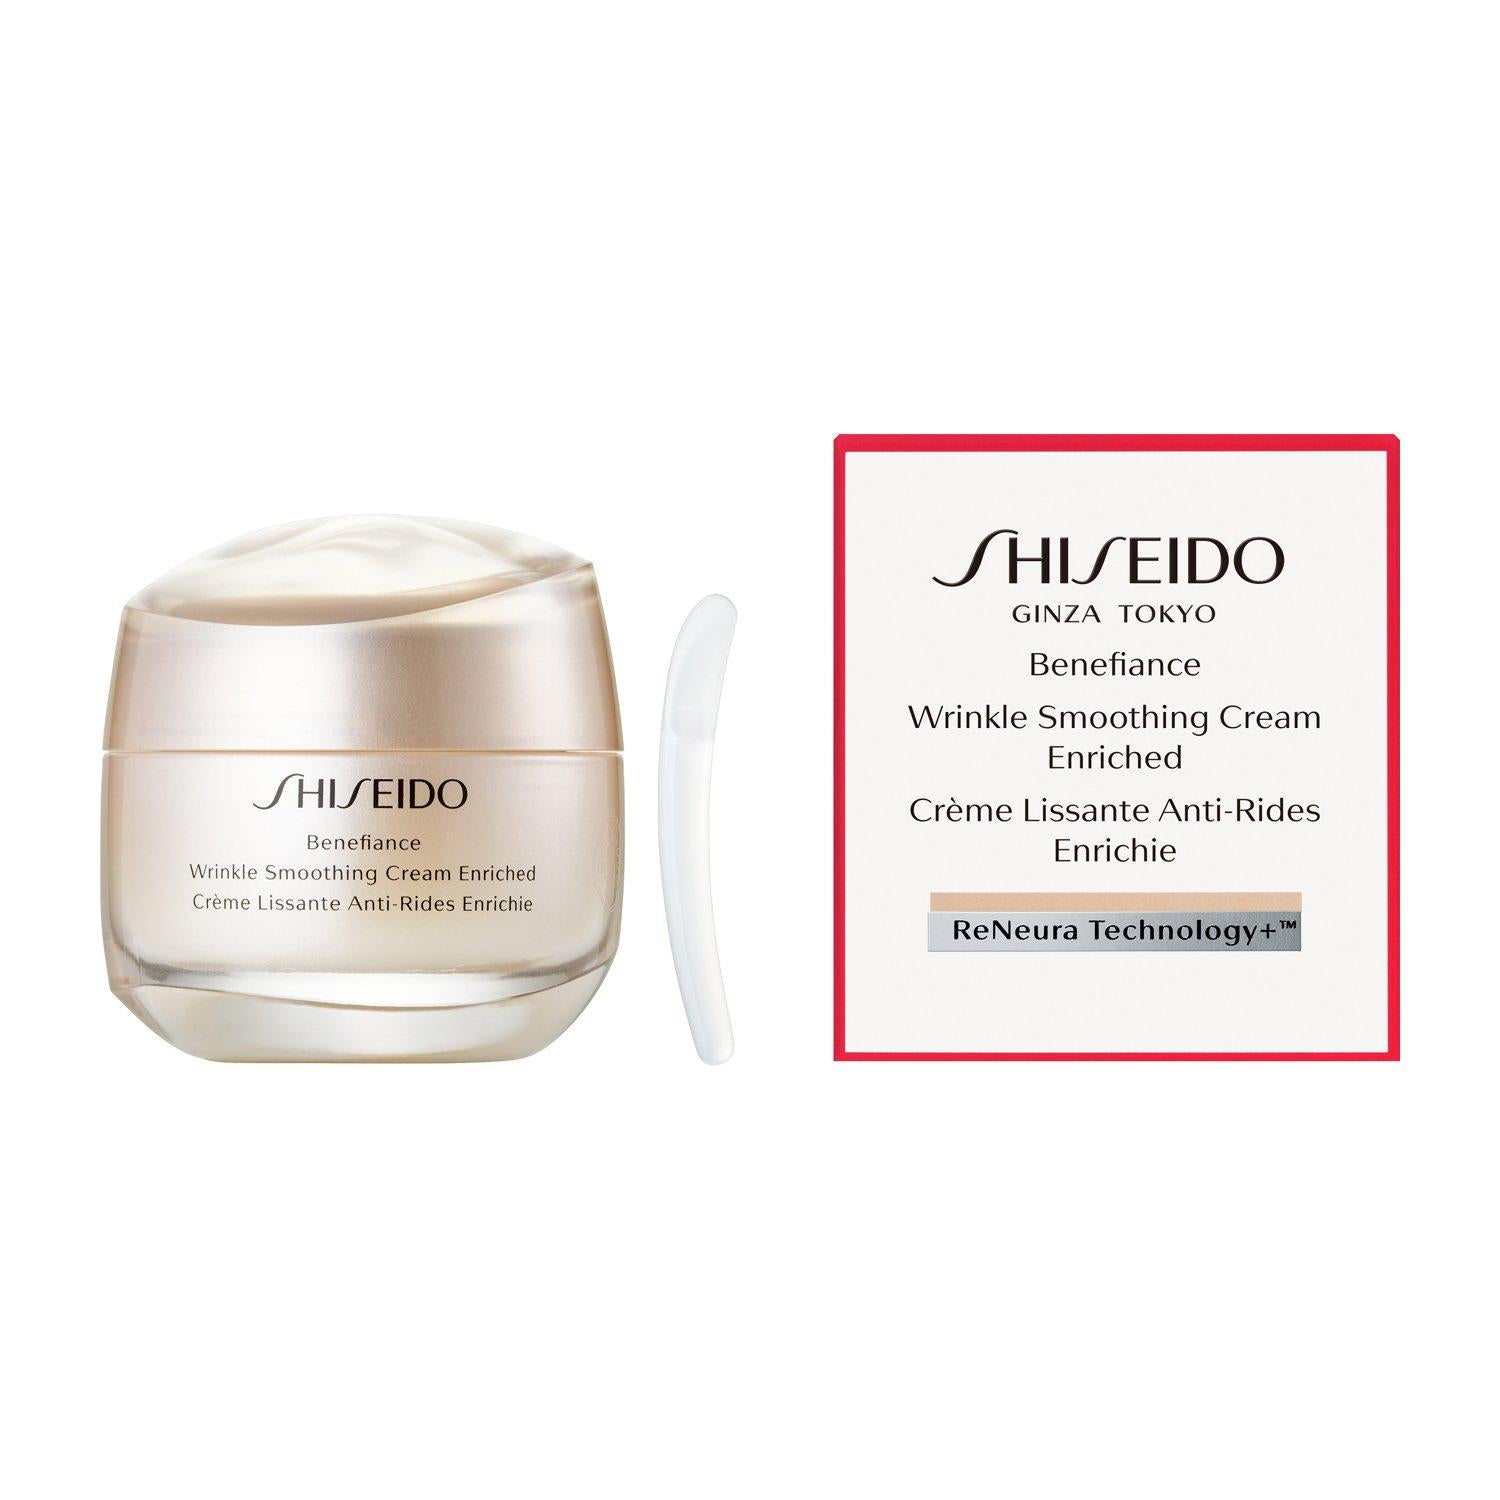 Shiseido Benefiance Wrinkle Smoothing Cream Enriched 50g